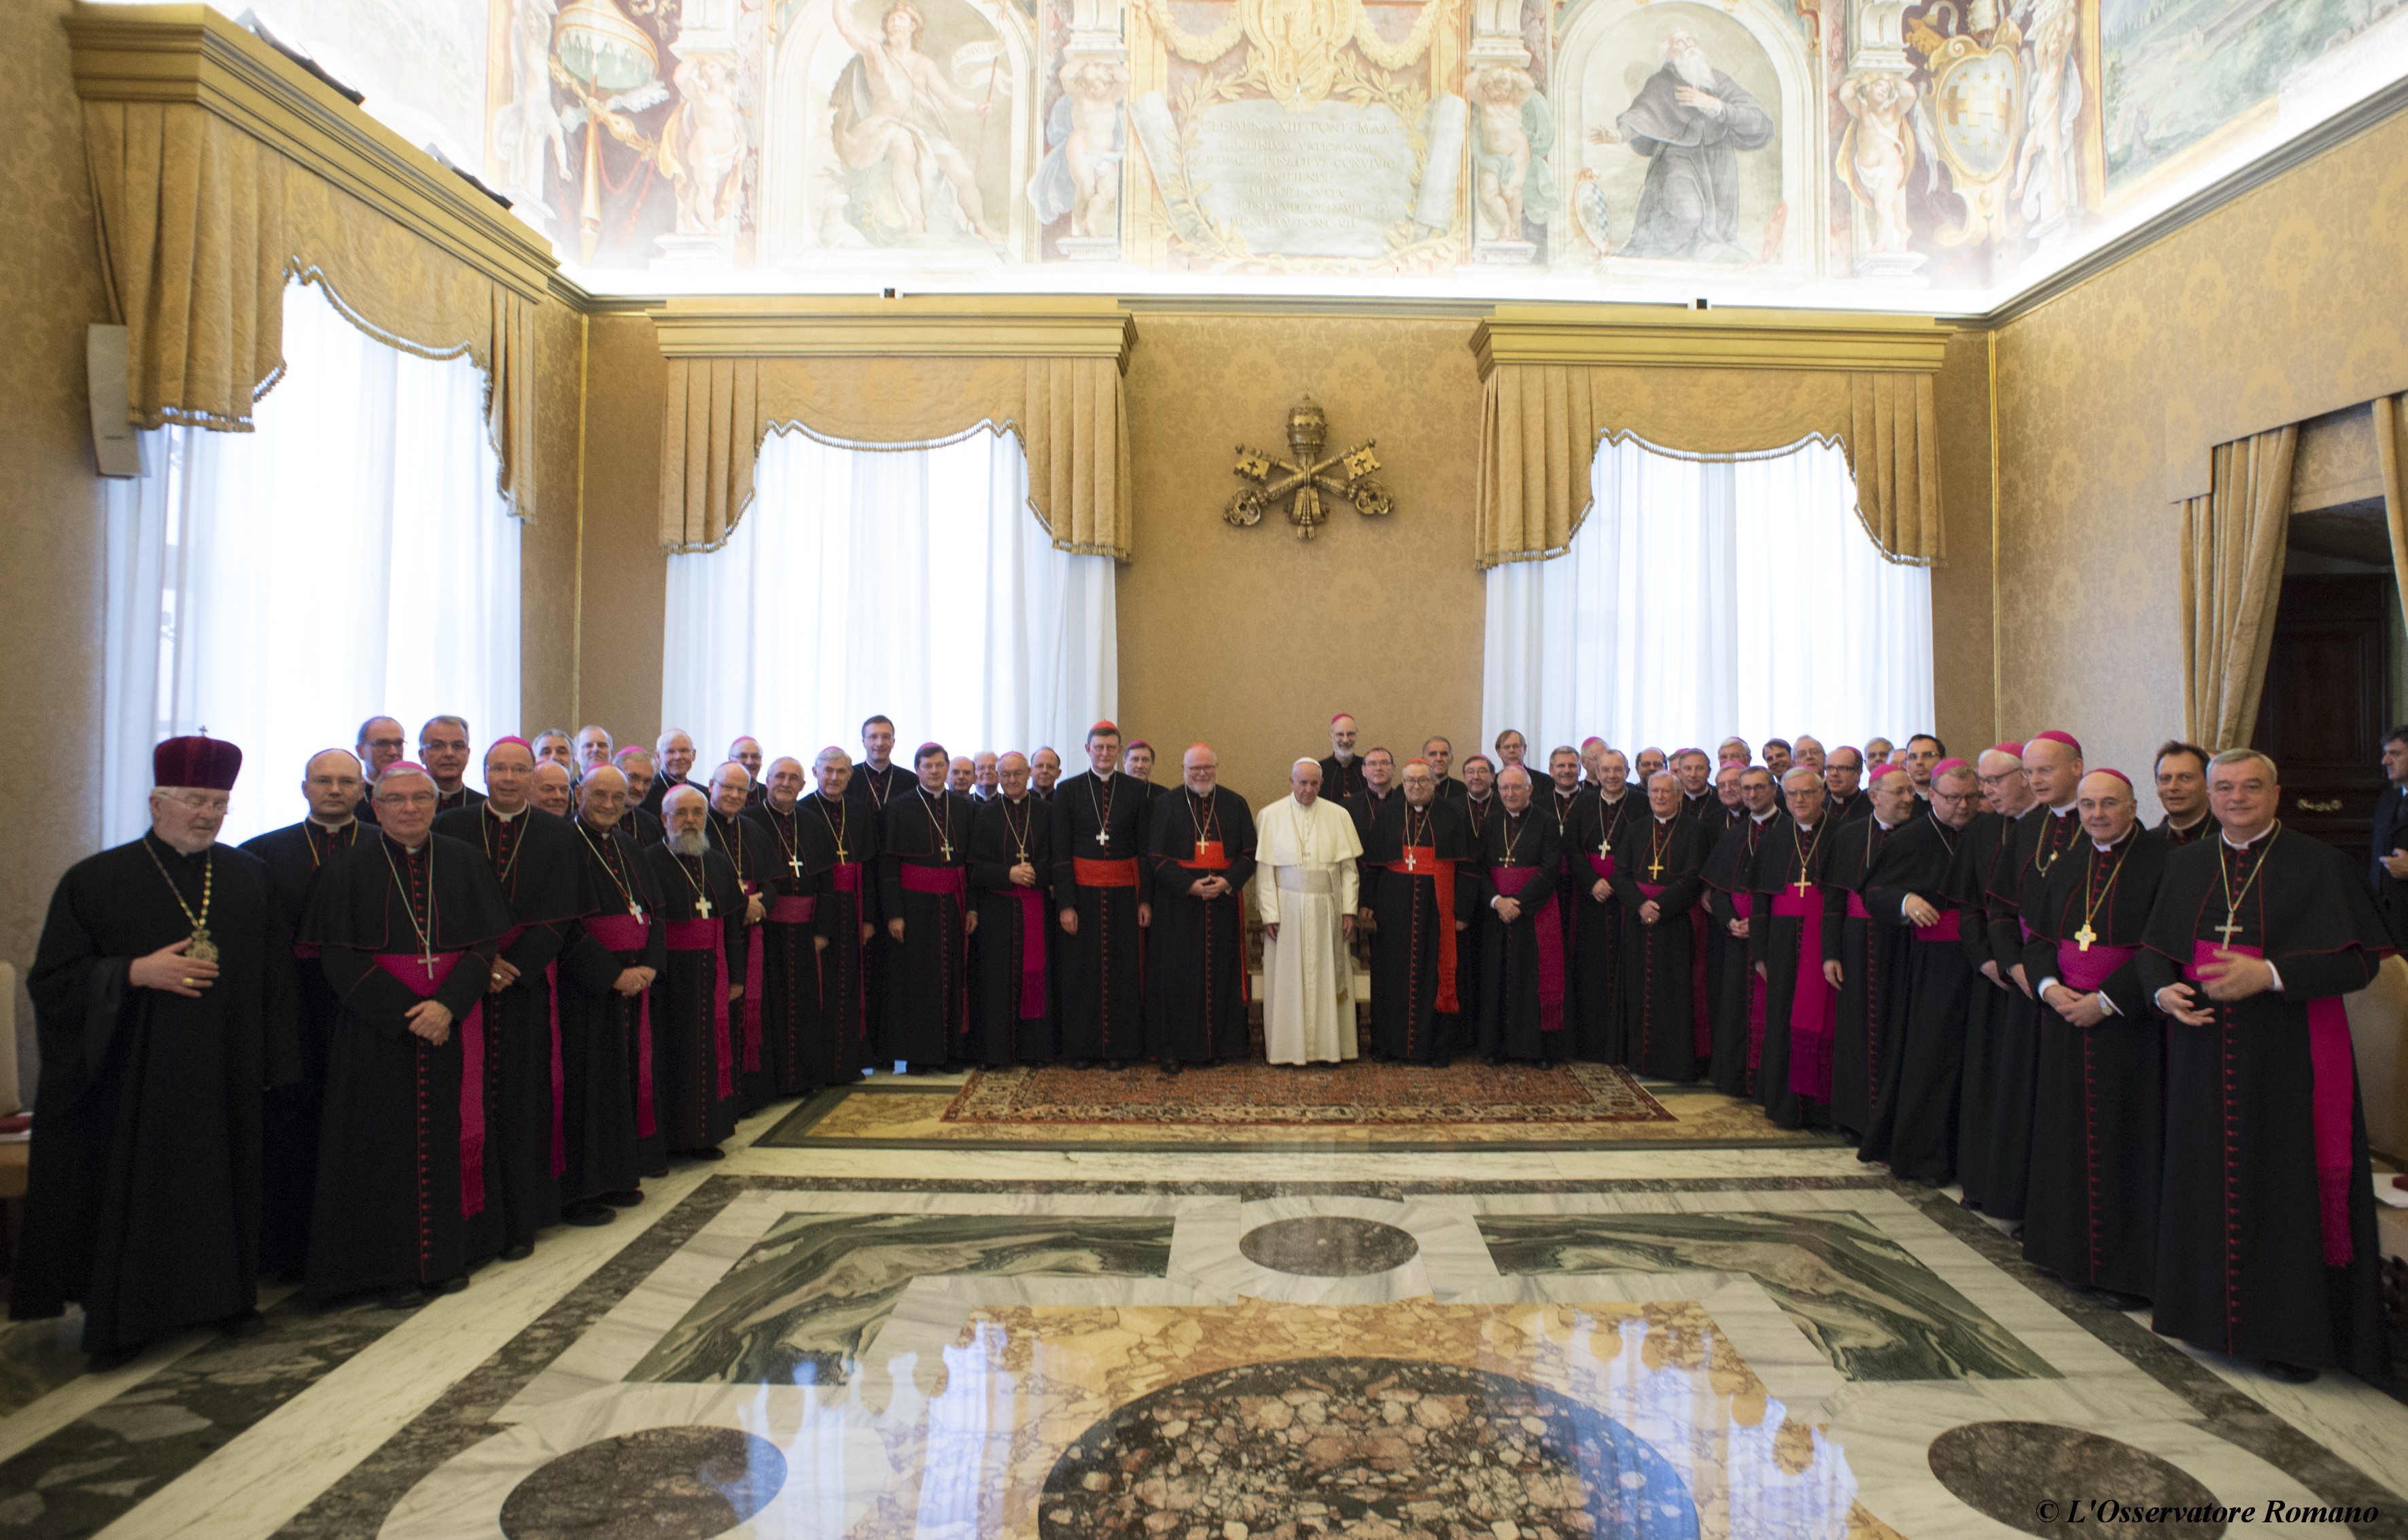 Pope Francis receives the German bishops during their visit "ad limina apostolorum"